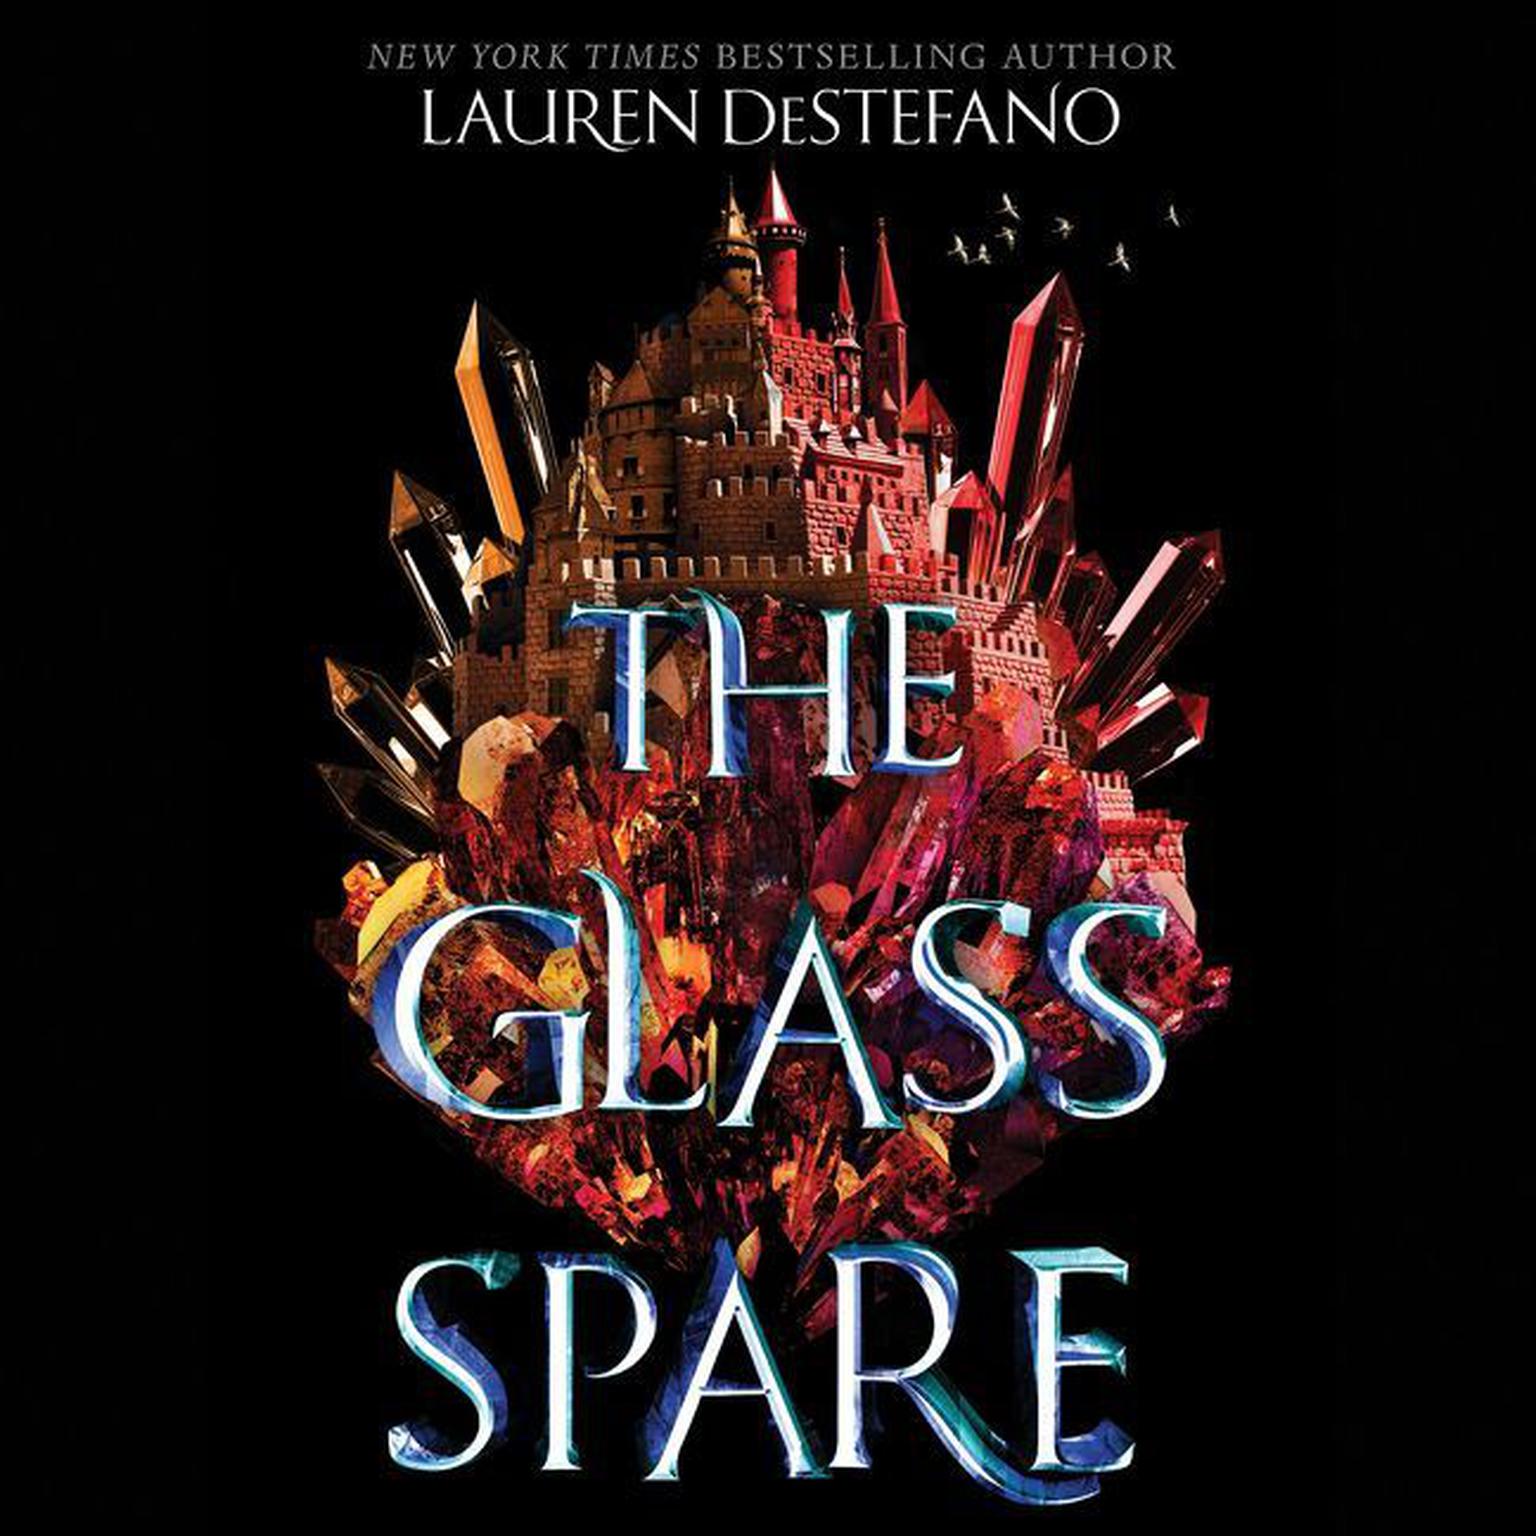 The Glass Spare Audiobook, by Lauren DeStefano